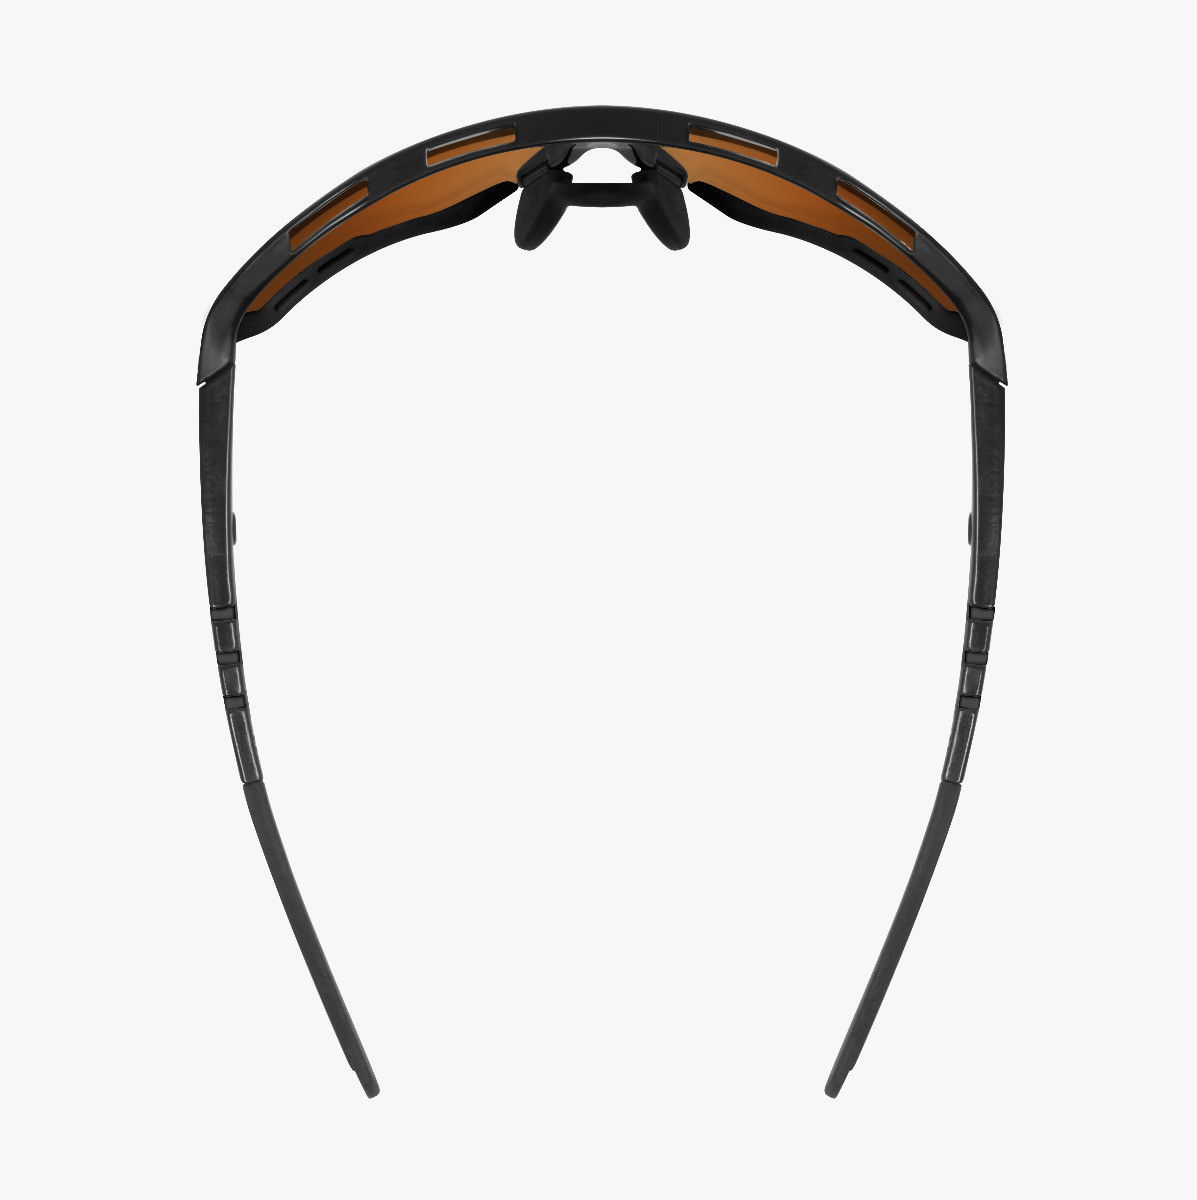 Scicon Sports | Aerocomfort Sport Cycling Performance Sunglasses - Black Gloss / Photocromatic Bronze - EY15170201
